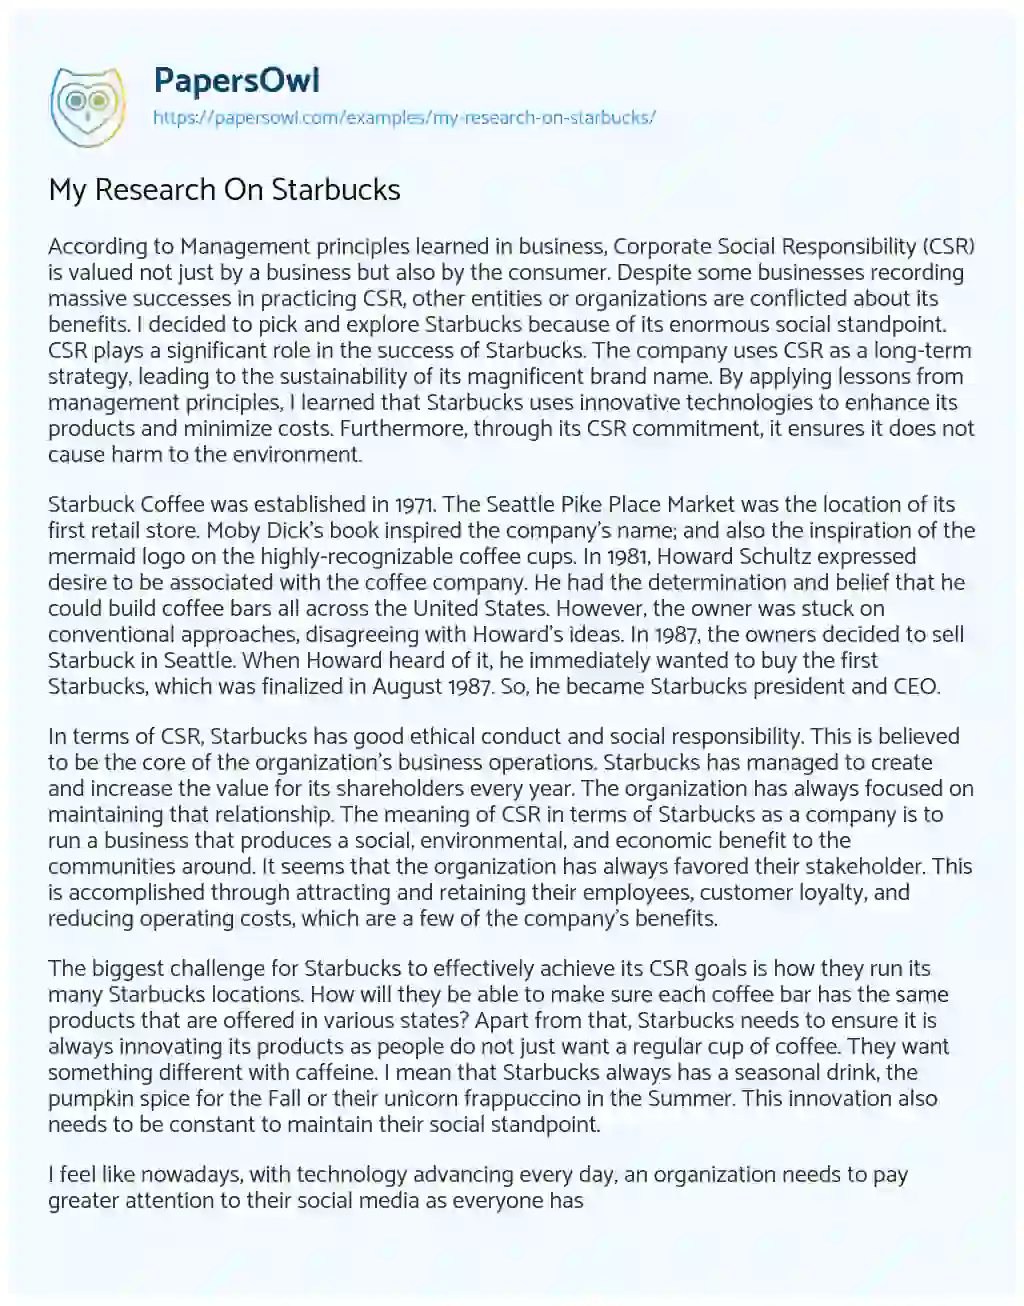 Essay on My Research on Starbucks